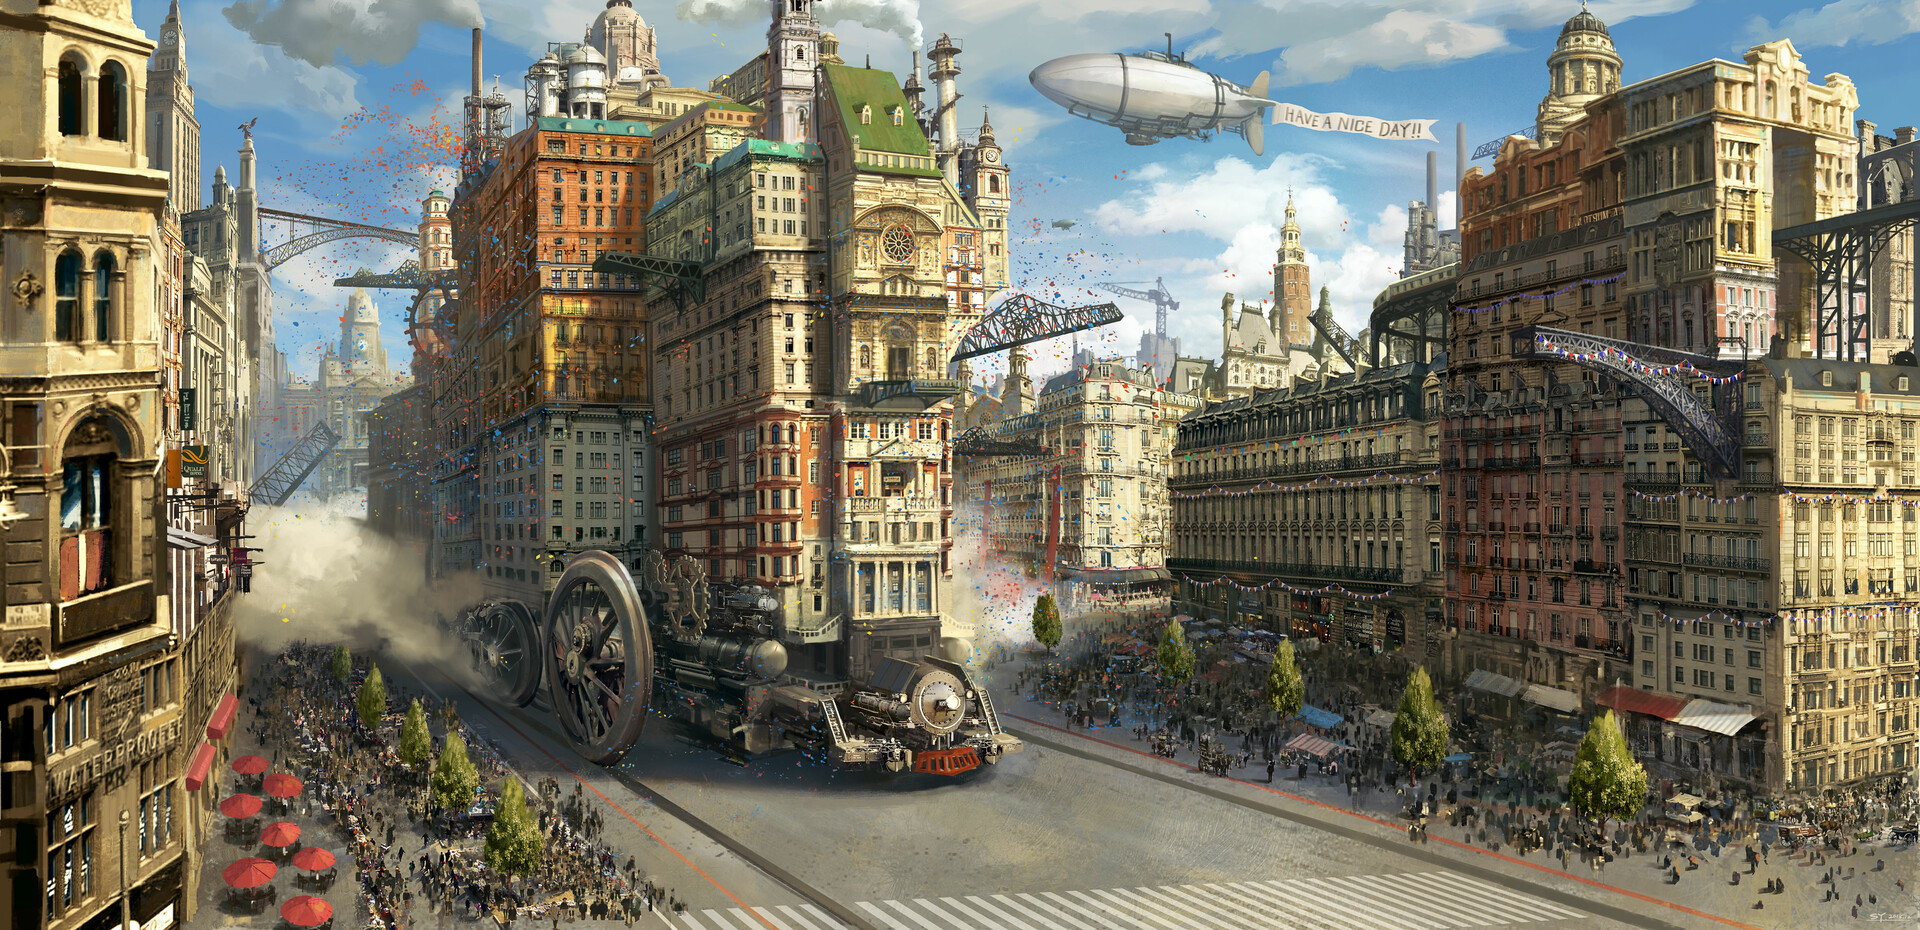 SY 37 Digital Art Landscape Fantasy Art Steampunk Cityscape Fantasy City Airships 1920x930